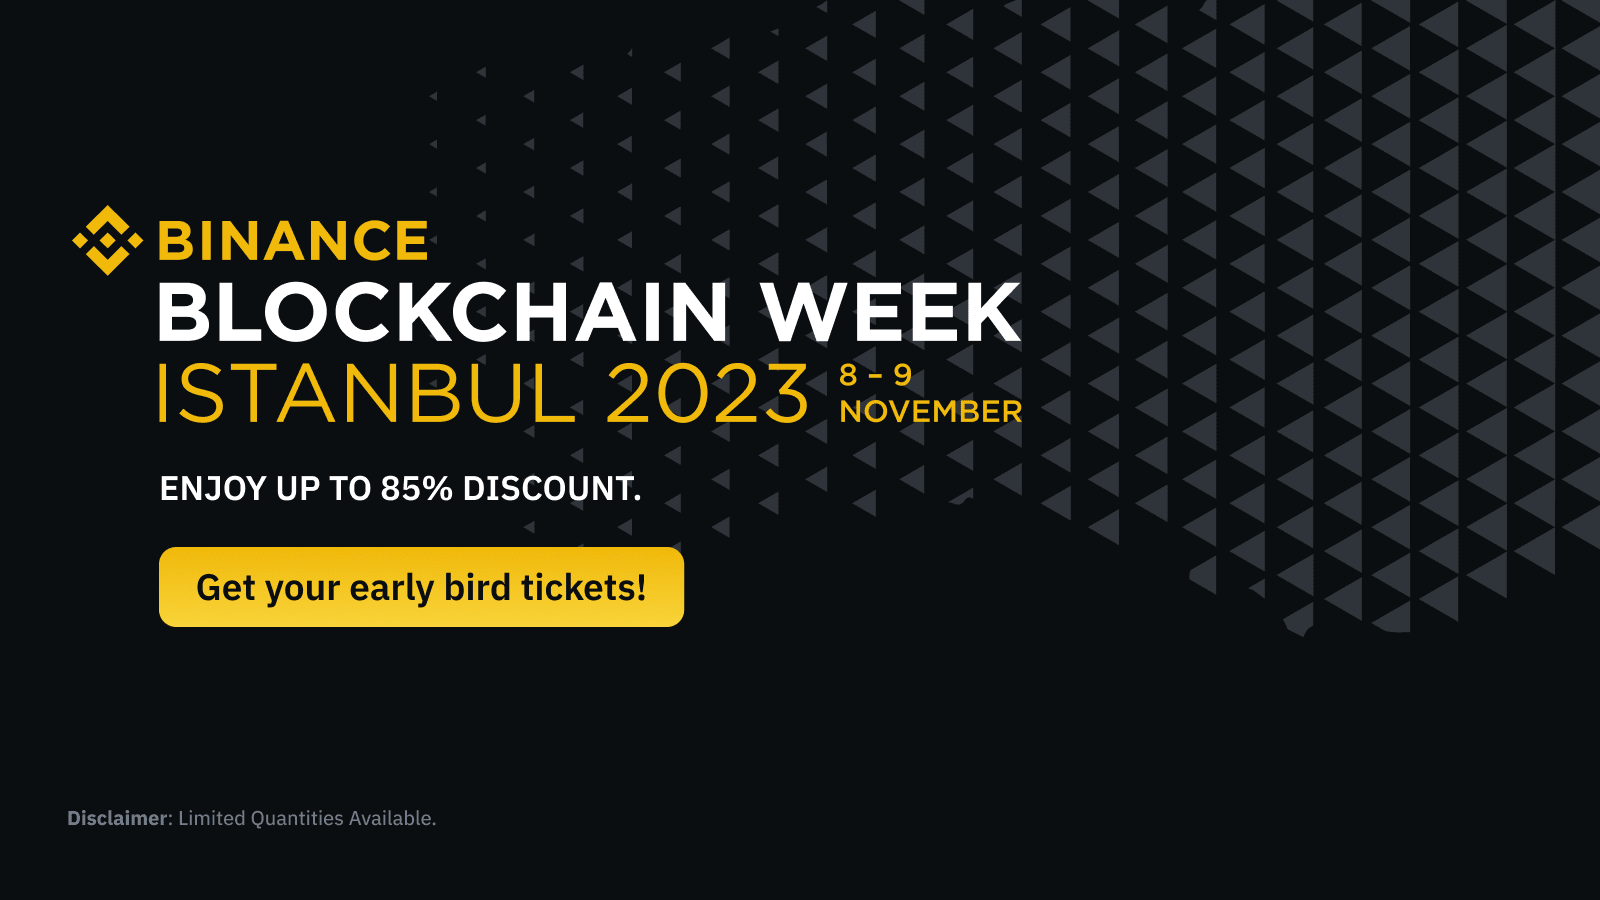 Binance Blockchain Week 2023